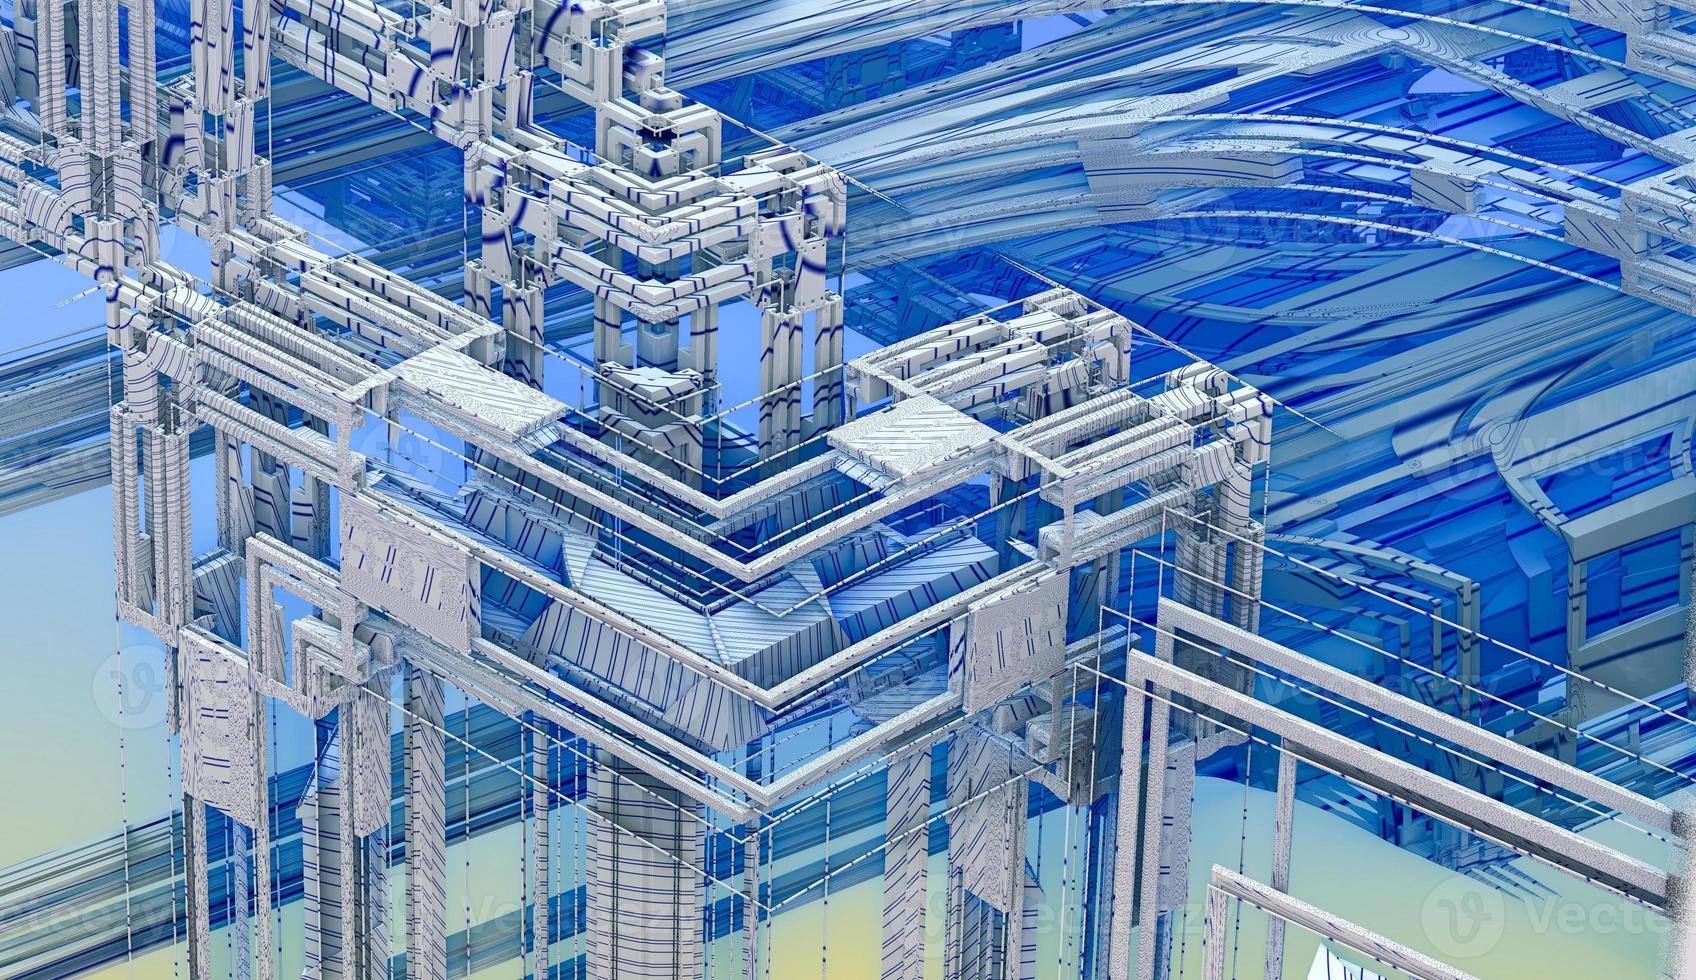 3D Illustration of a Beautiful infinite mathematical mandelbrot set fractal futuristic blue metal structure spaceship photo